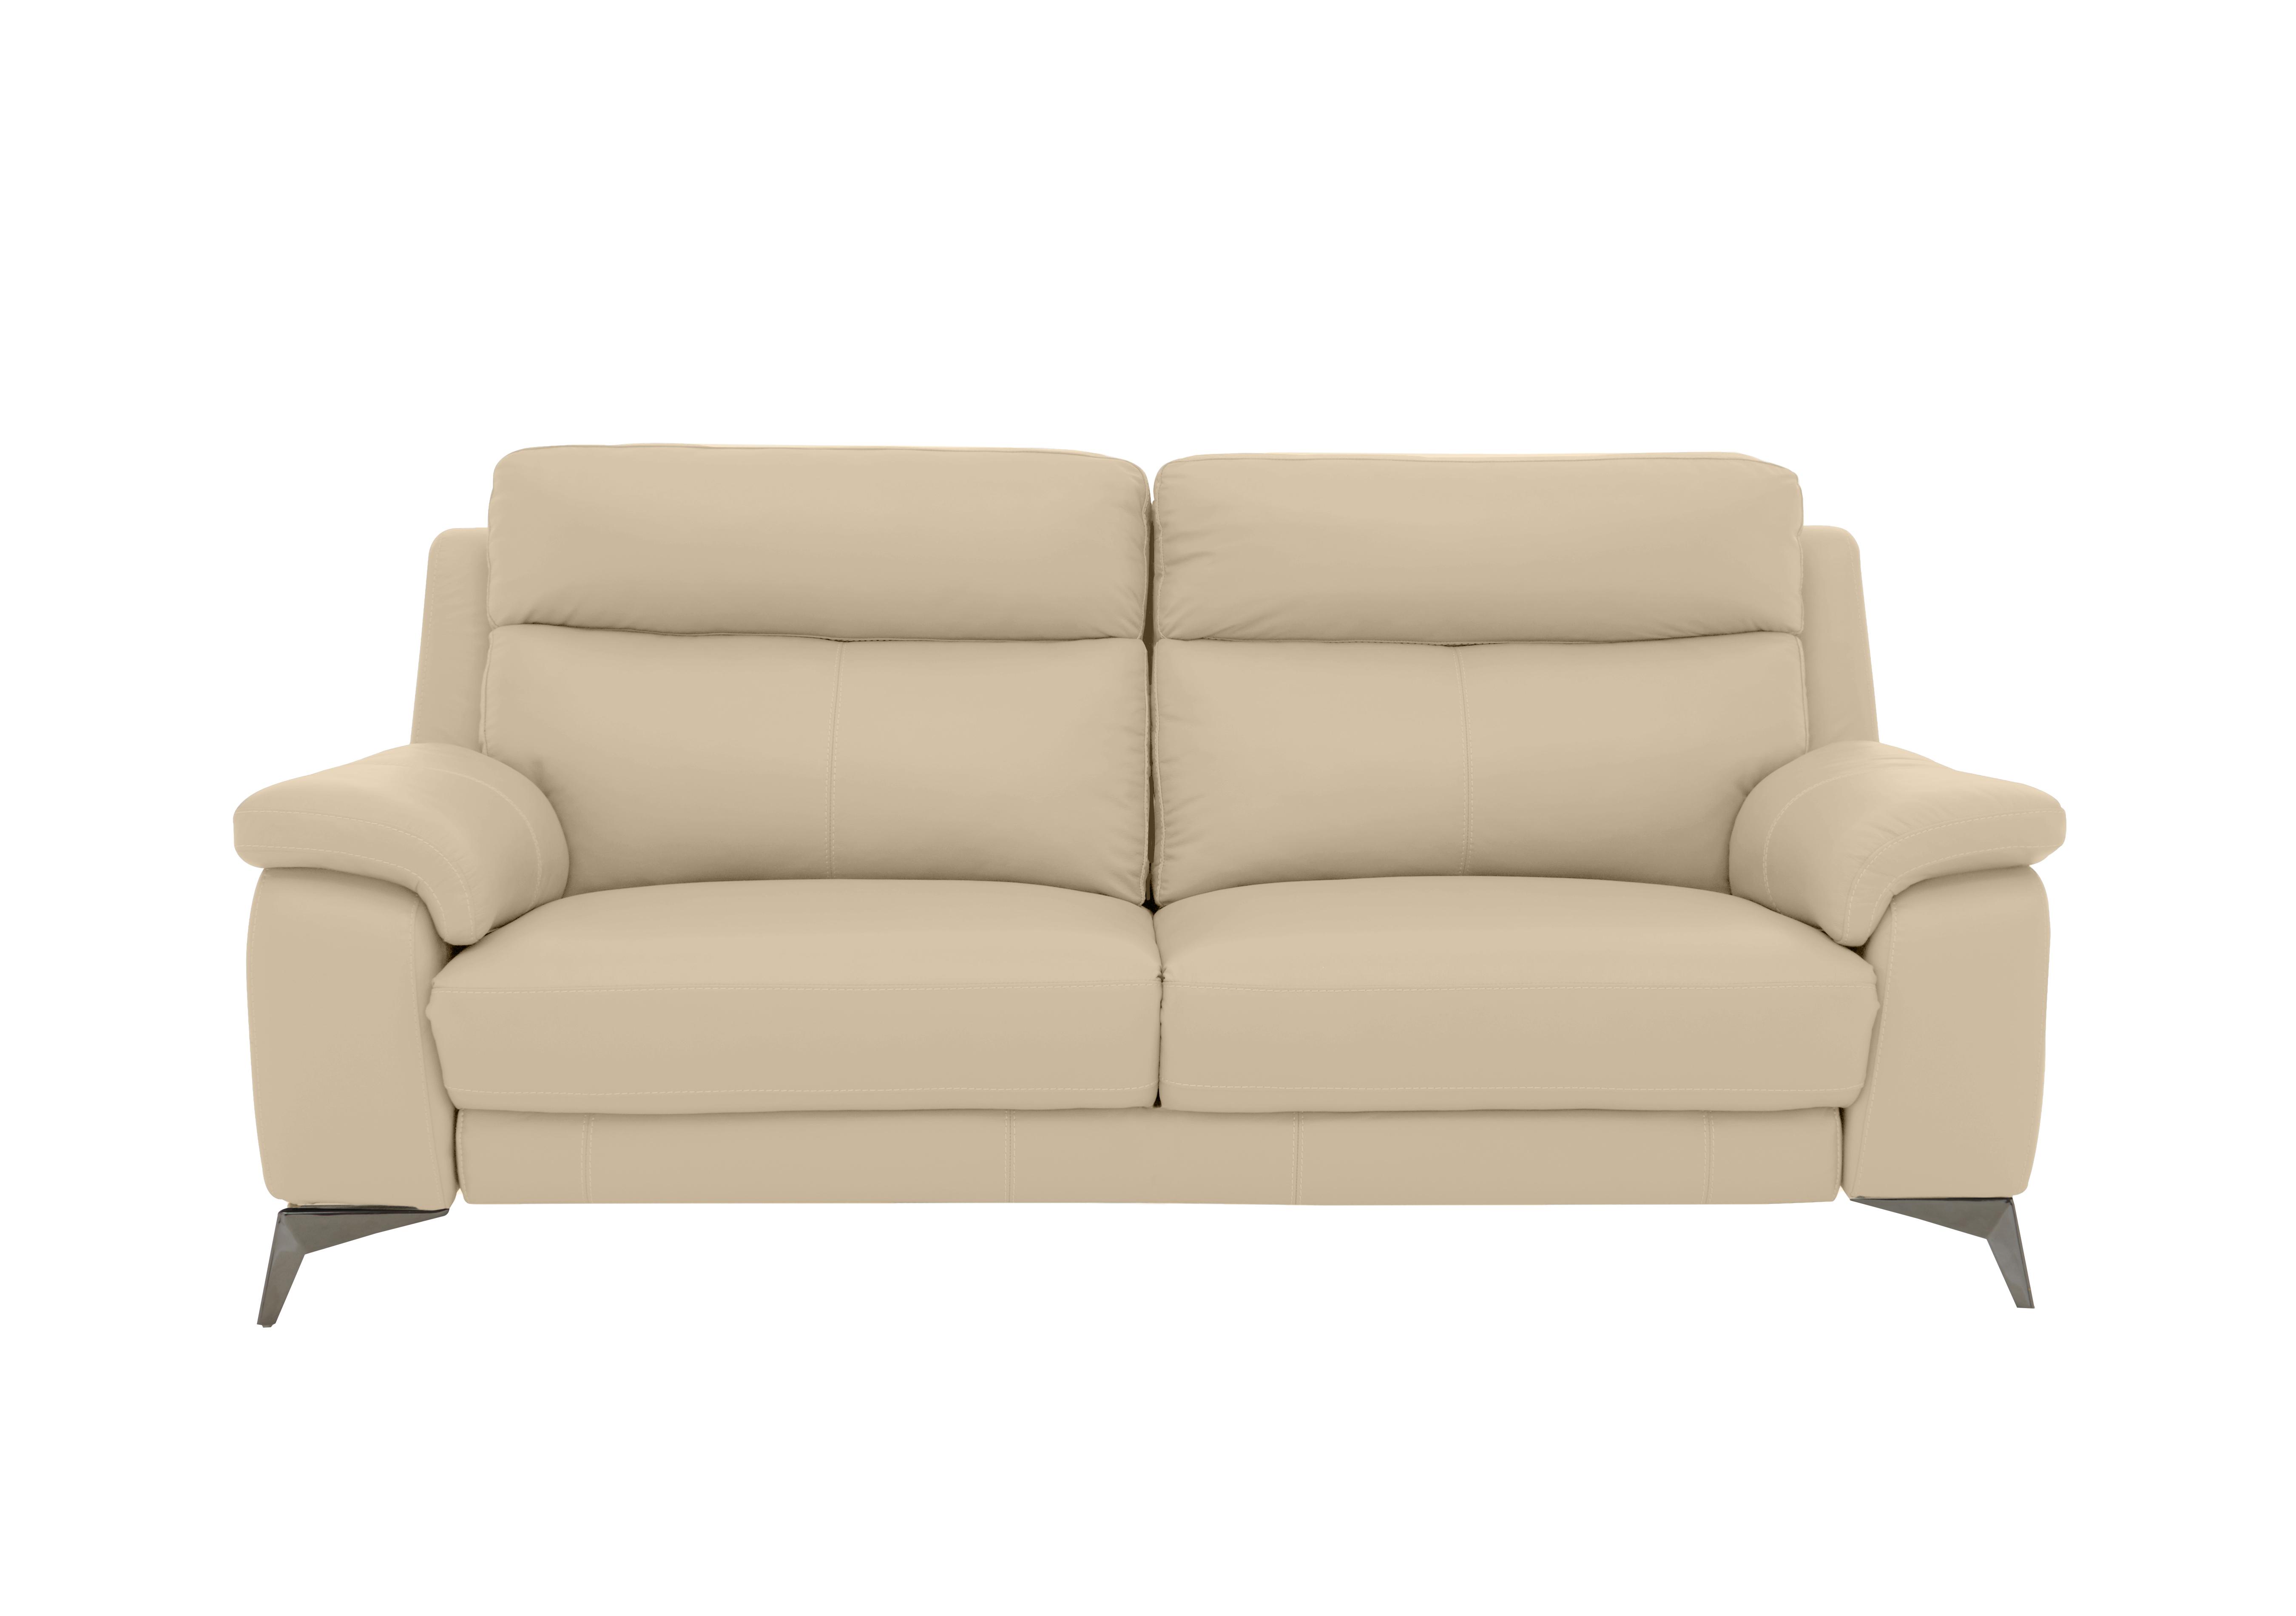 Missouri 3 Seater Leather Sofa in Bv-862c Bisque on Furniture Village